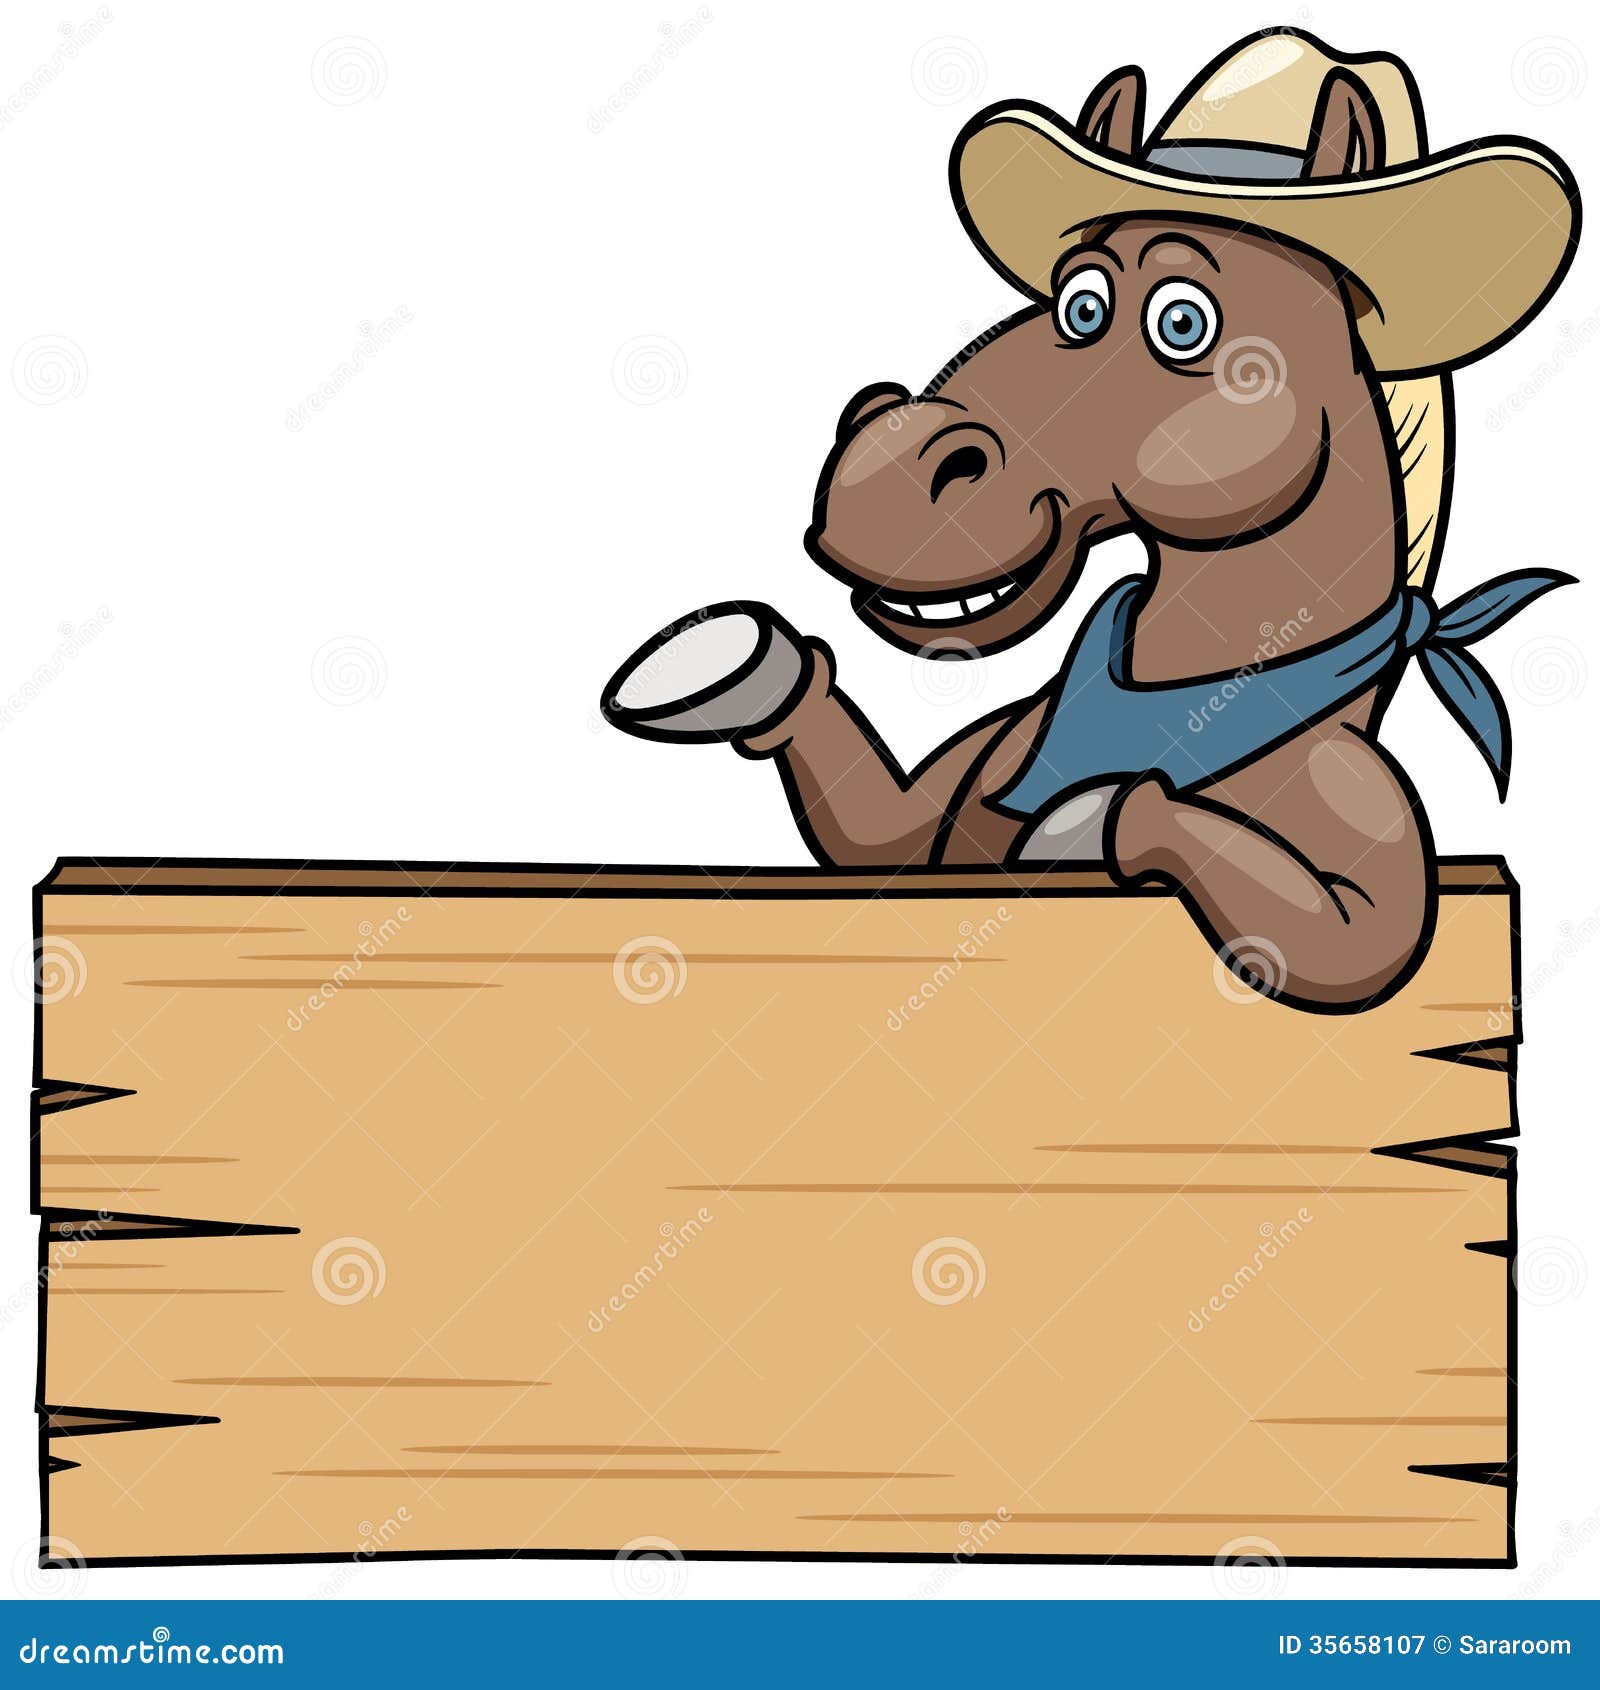 Cartoon Horse Royalty Free Stock Photography - Image: 35658107